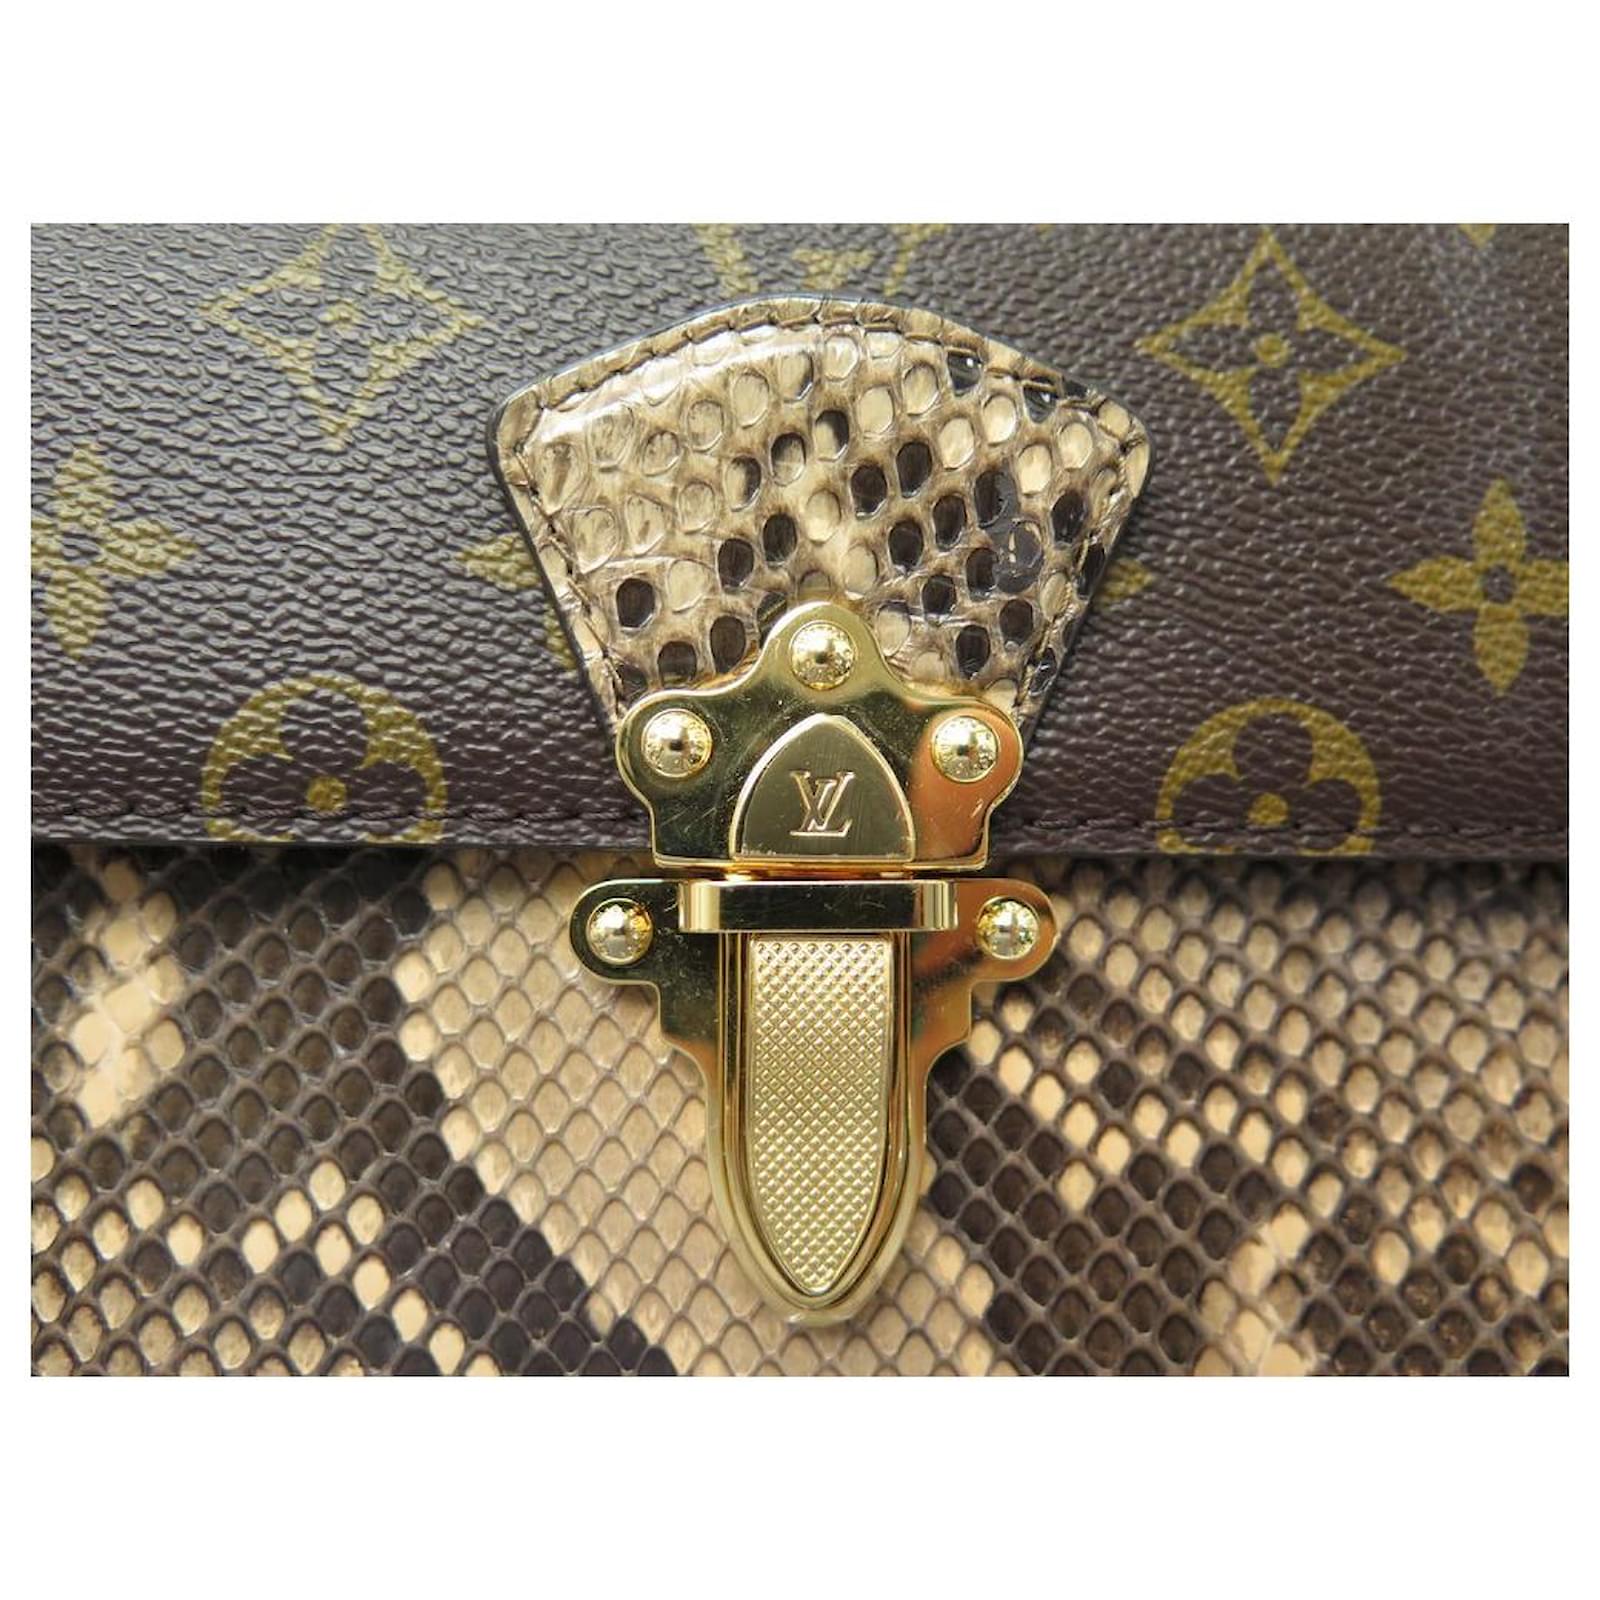 Louis Vuitton Victoire Handbag Monogram Canvas and Python at